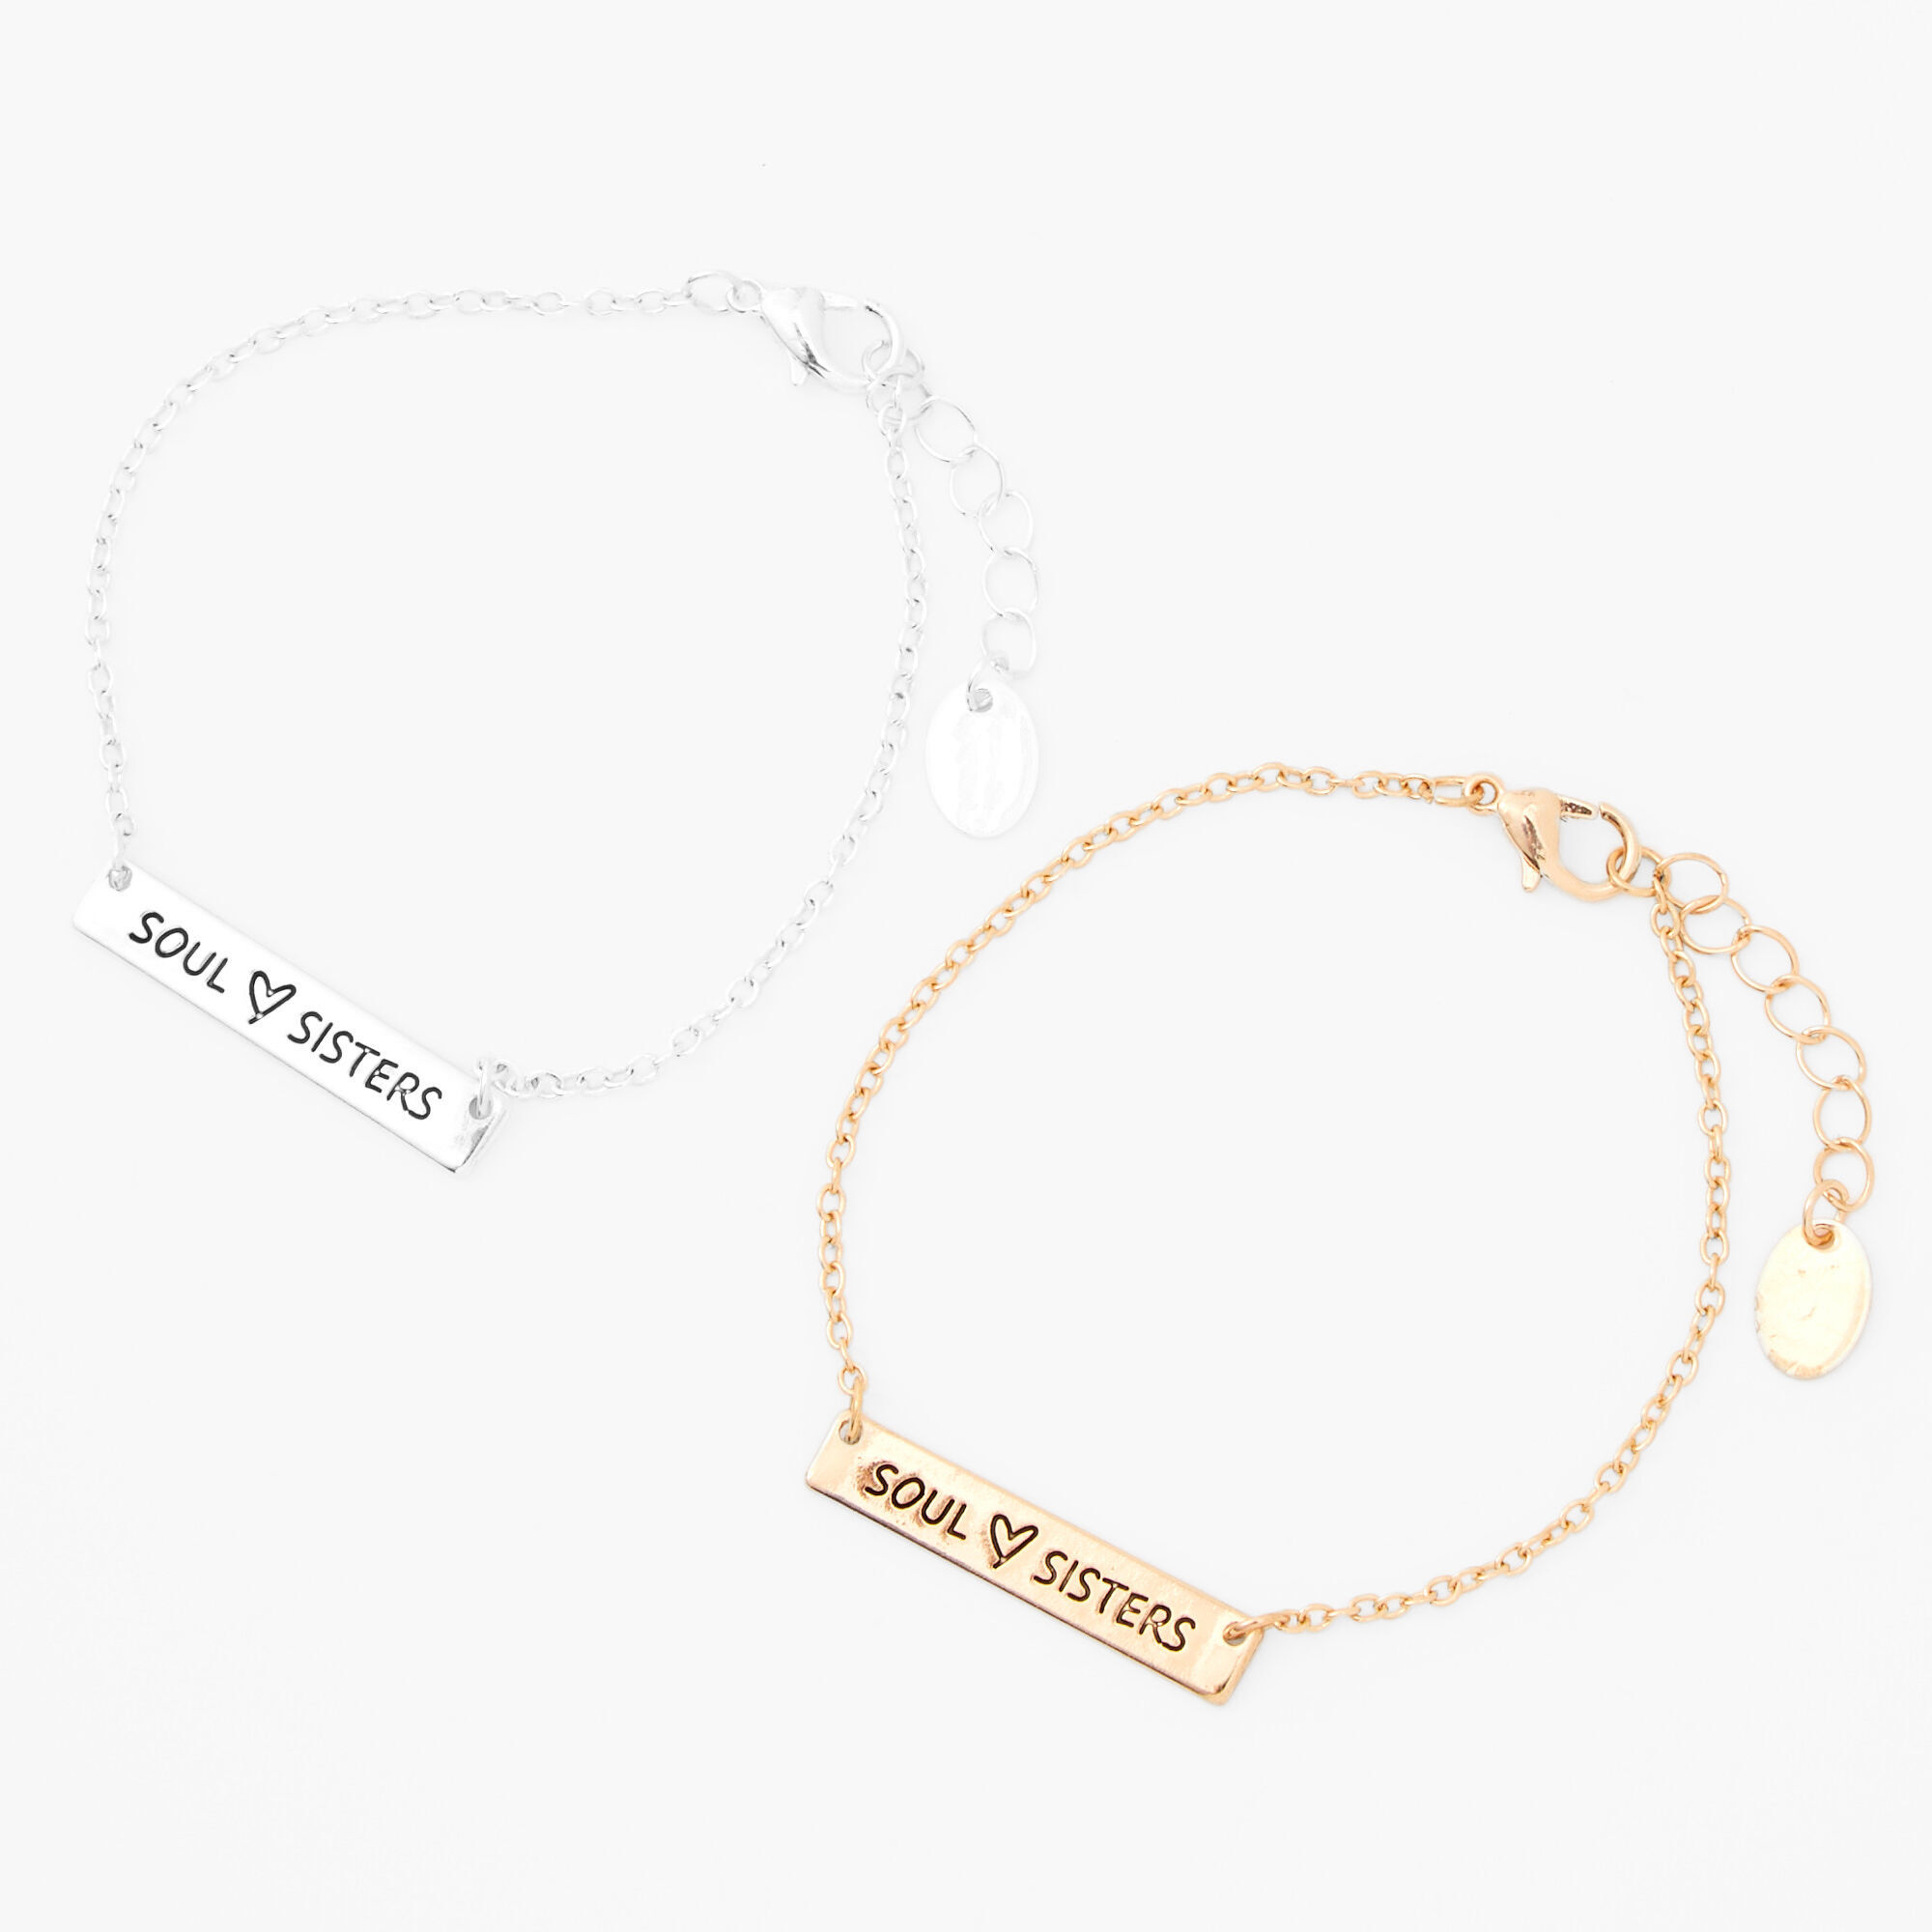 Sister Bracelets for 2 Sister Bracelet/ Sister Gift/ Linked Circle Bracelet/  Sisters by Heart/ Friendship Bracelet/ Matching Bracelets - Etsy